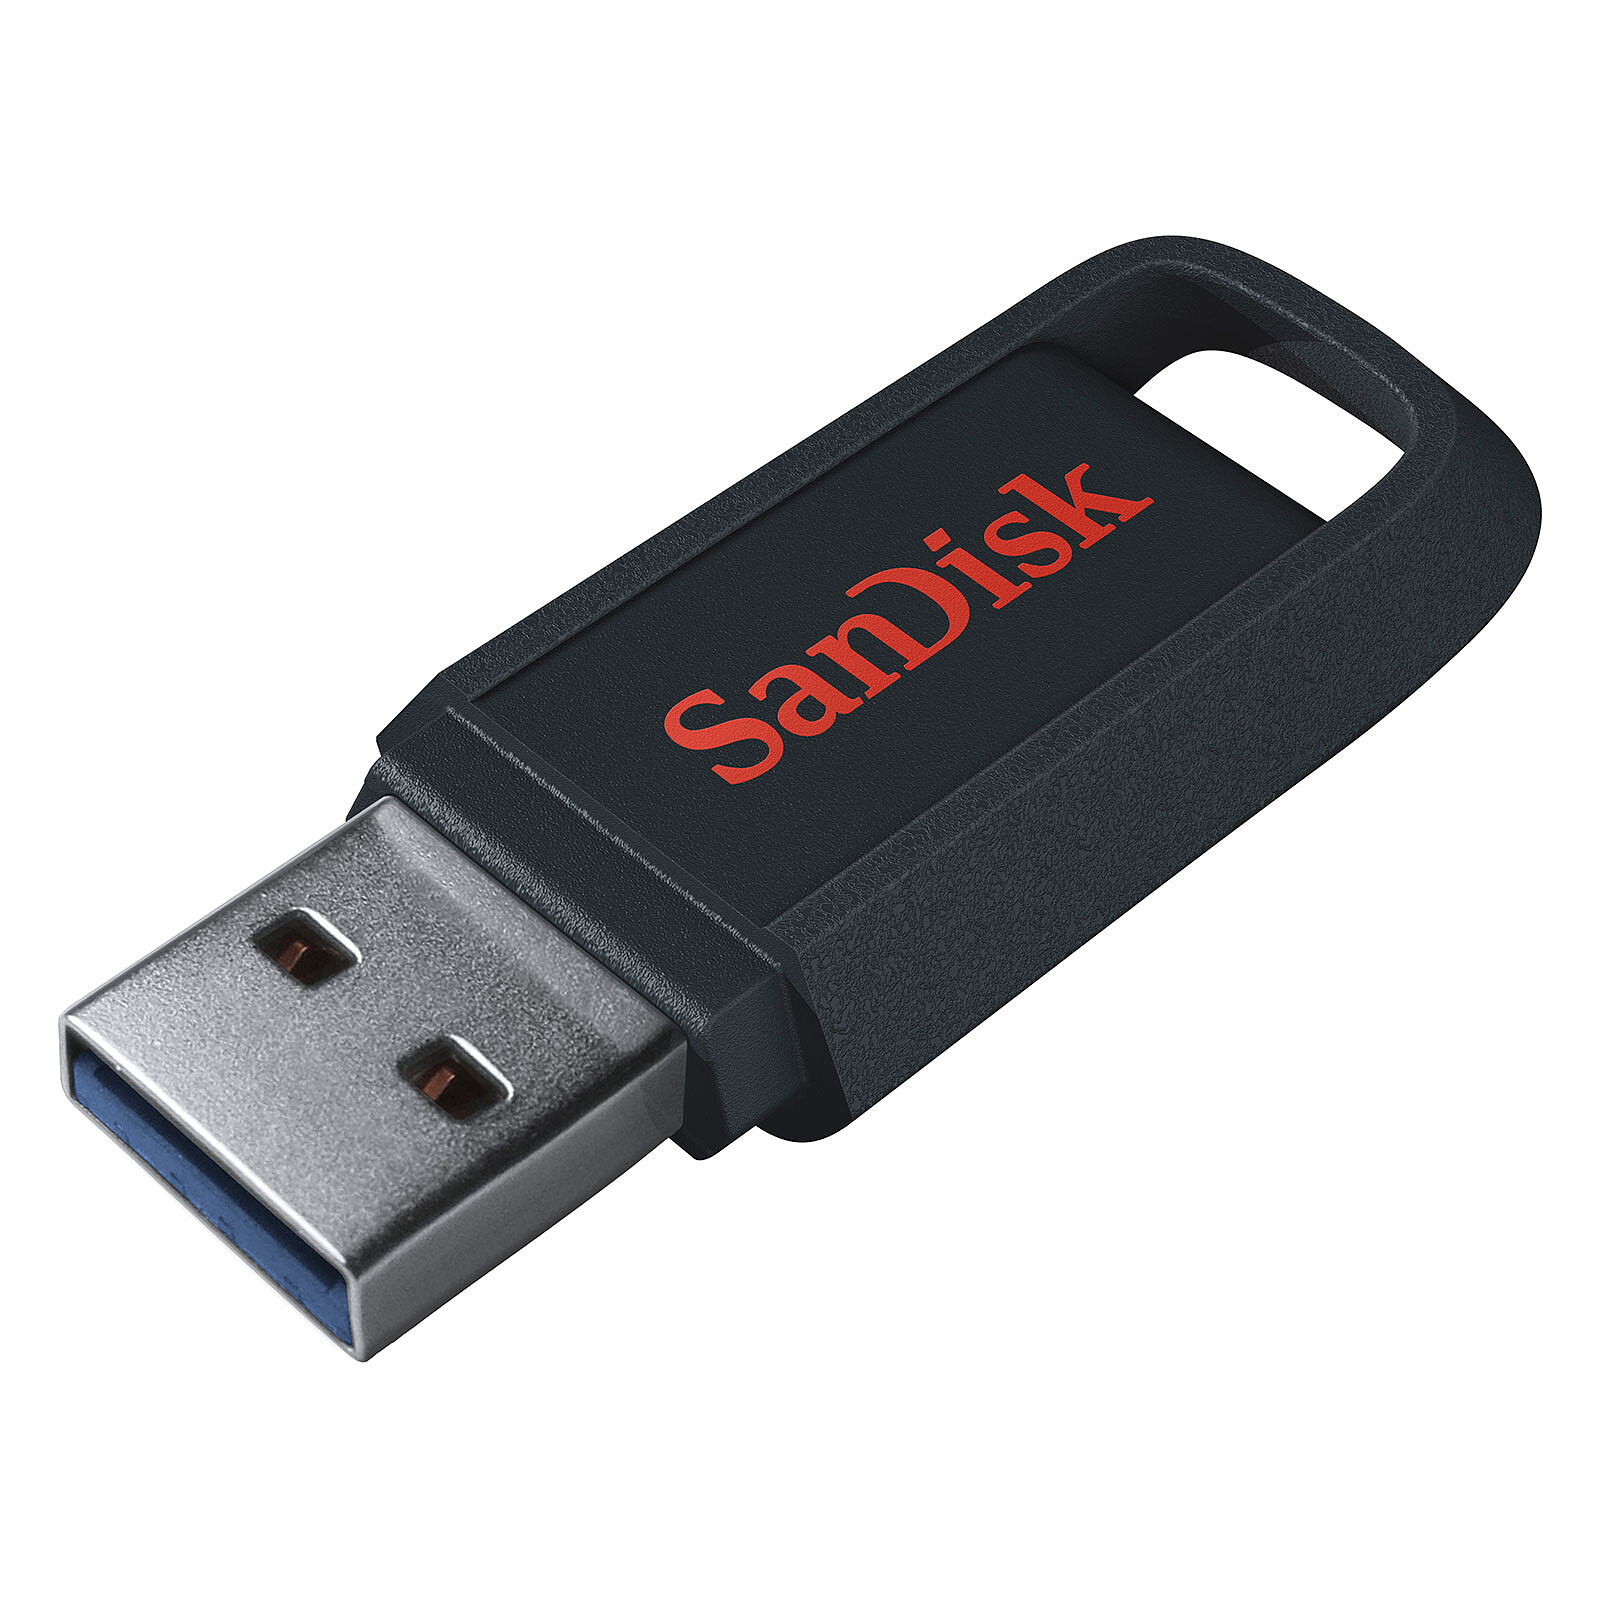 Usb 128 гб купить. Флешка SANDISK 64 GB USB 3.0. USB флешка 64 GB SANDISK. Флеш накопитель 64gb SANDISK. SANDISK 128gb USB 3.